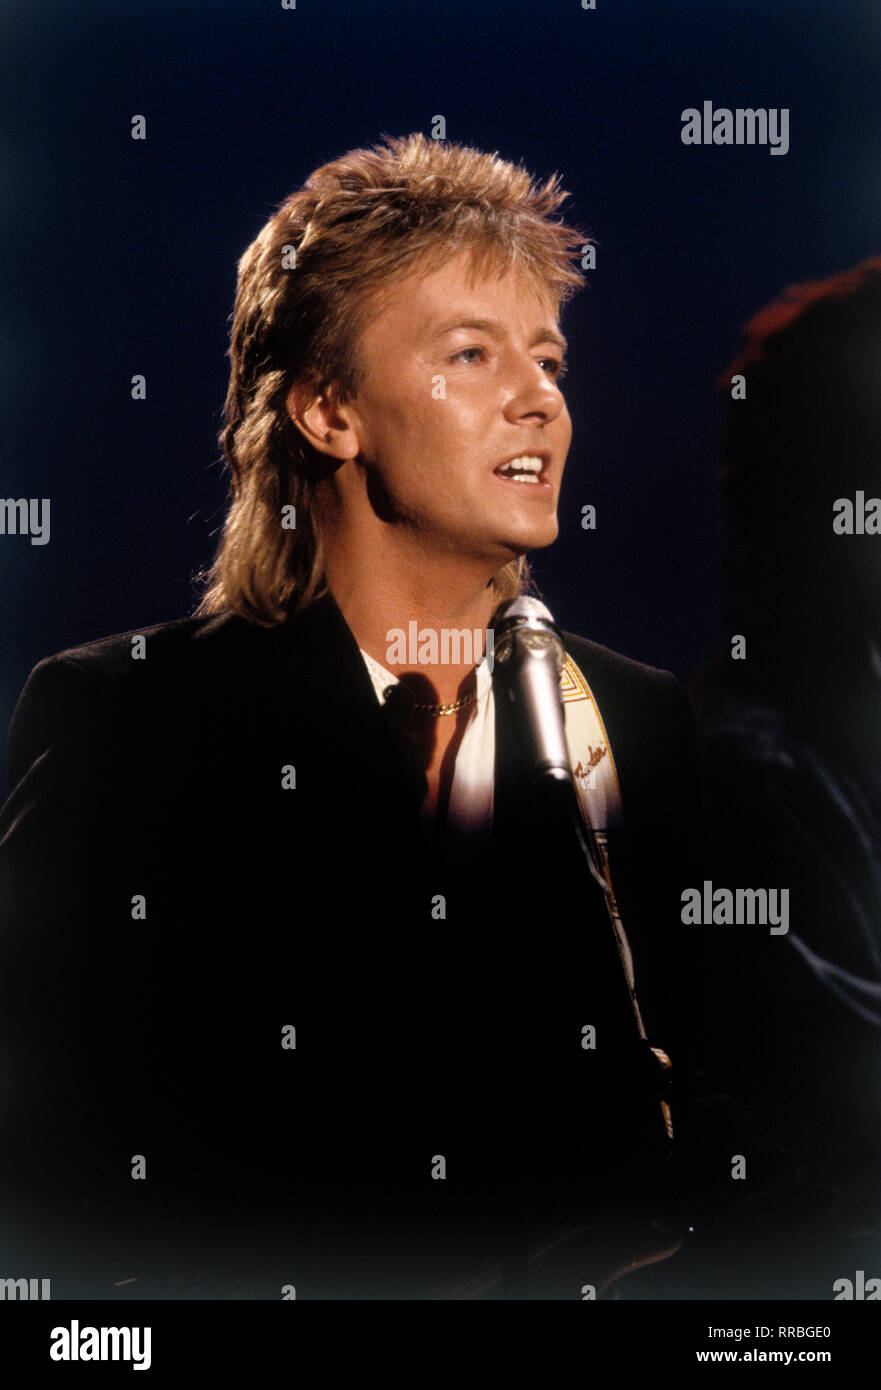 Rock singer CHRIS NORMAN (1988) / Überschrift: CHRIS NORMAN Stock Photo